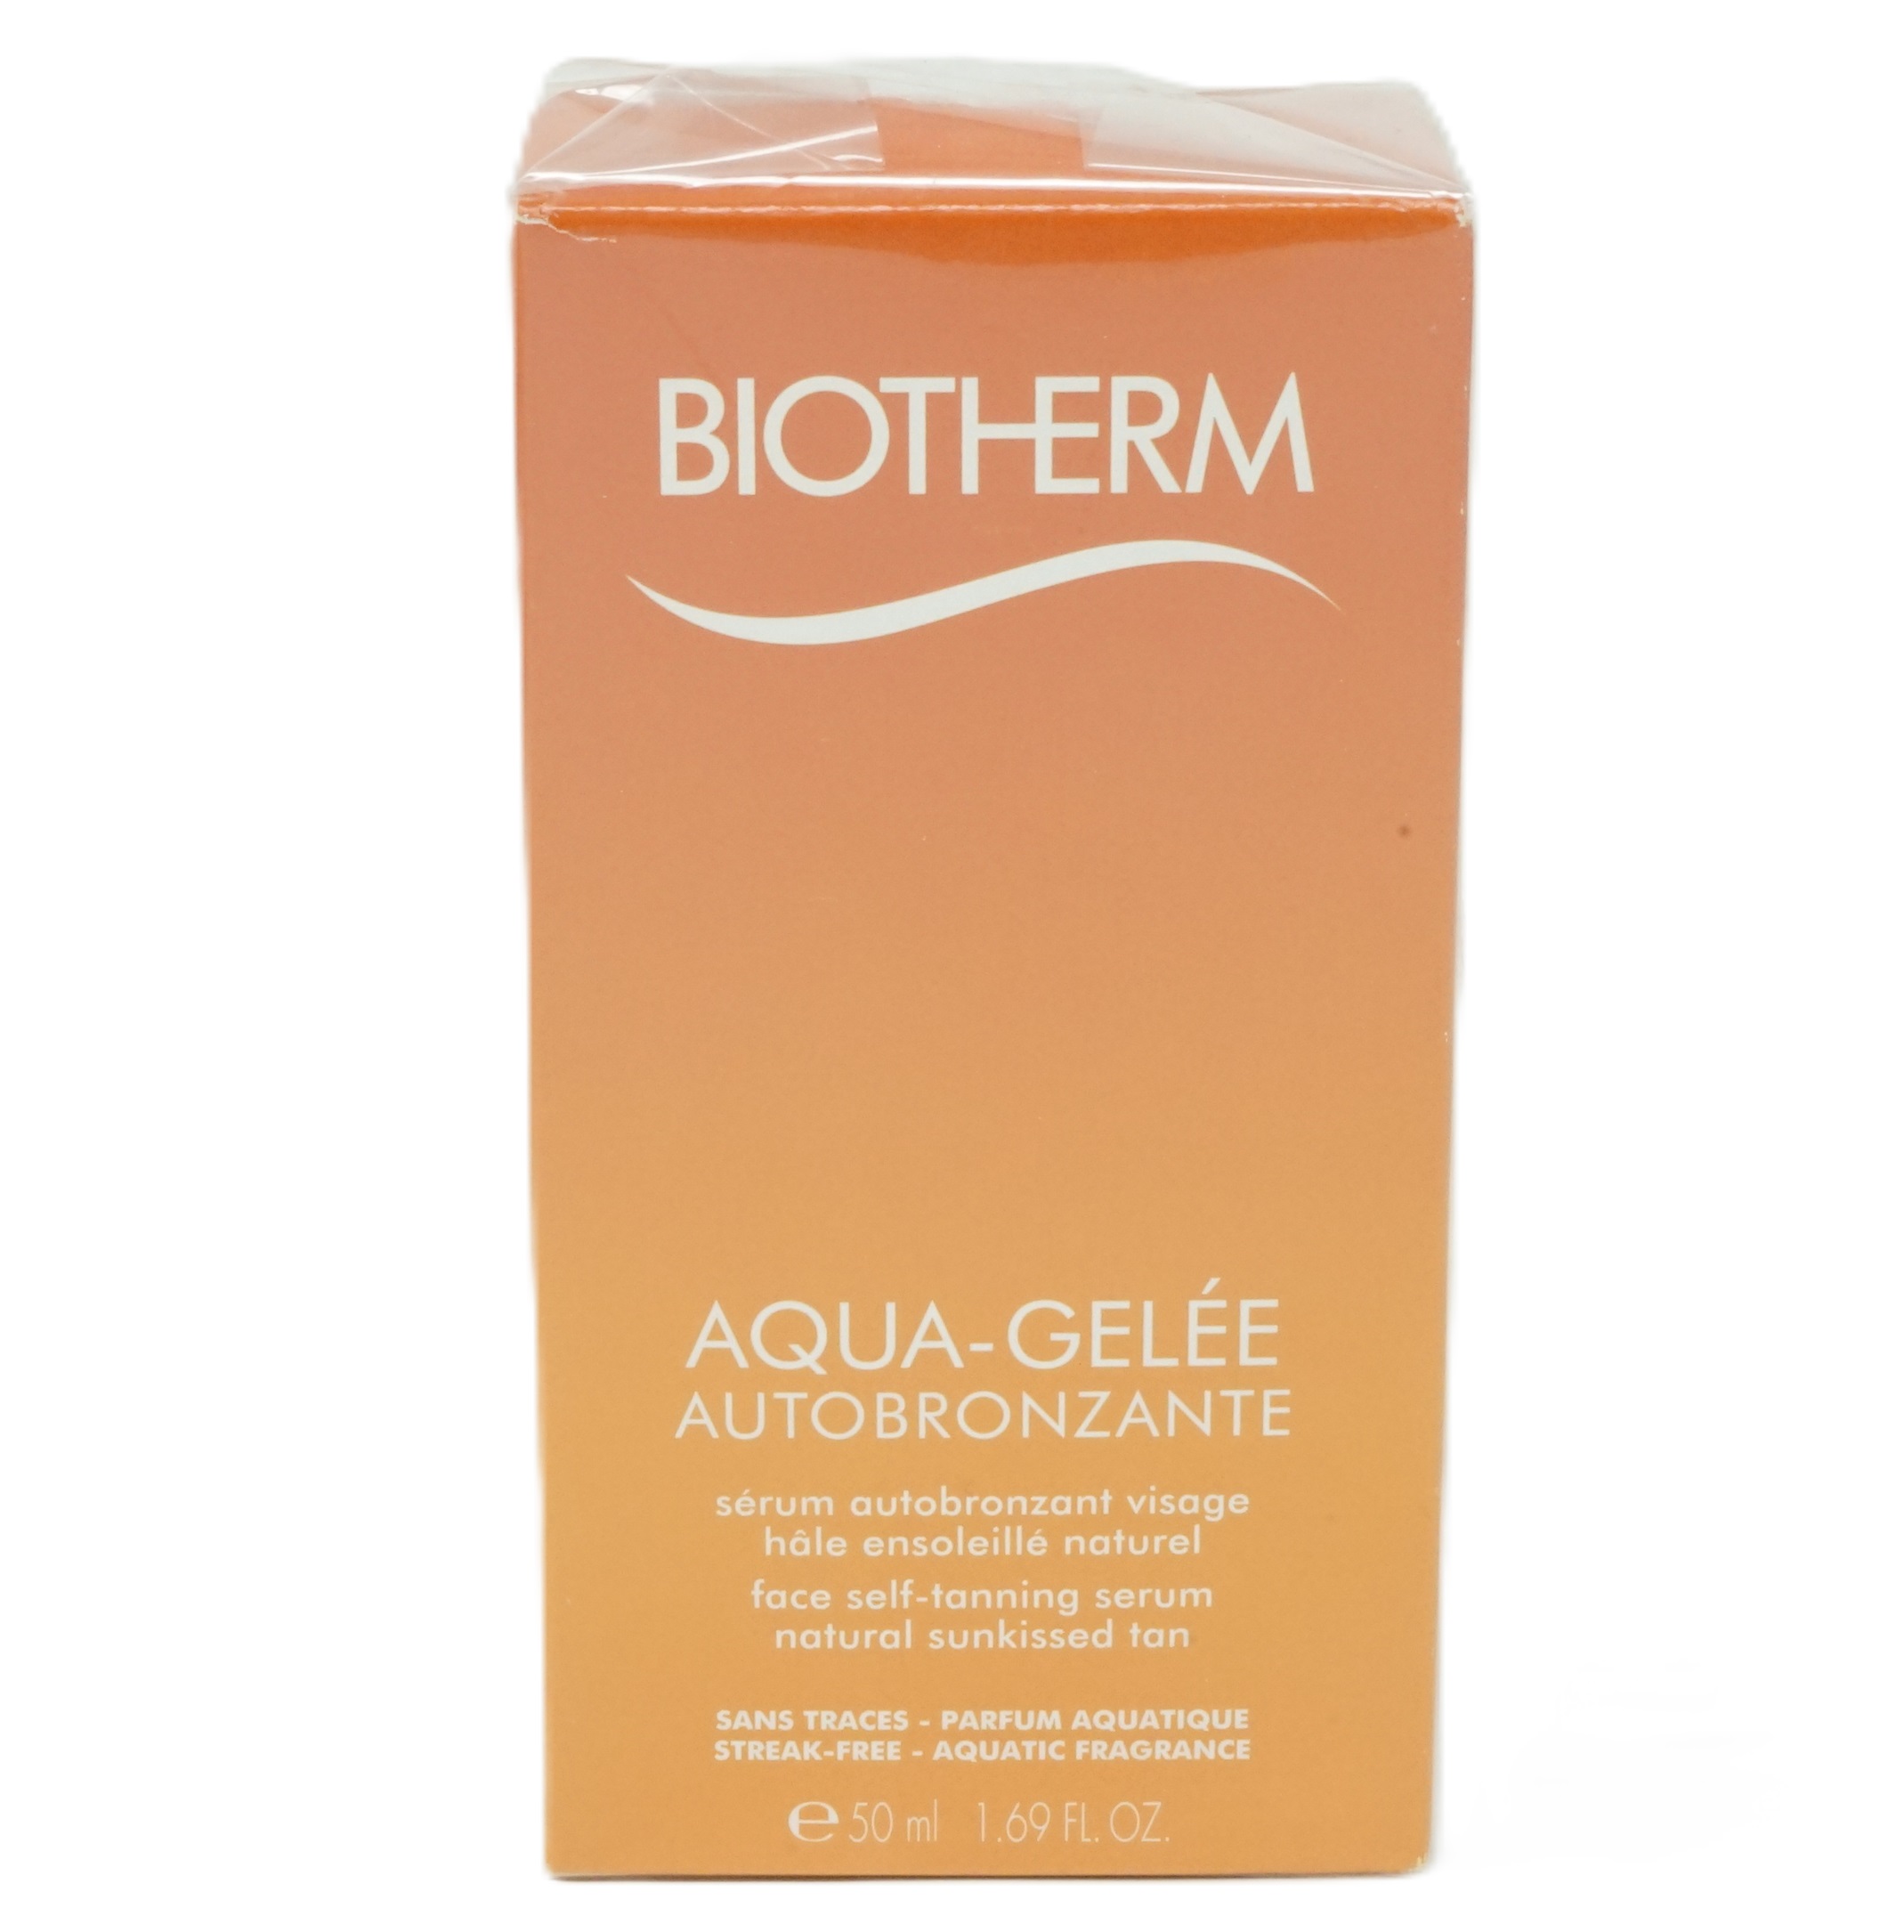 Biotherm Aqua Gelée Autobronzante Self-Tanning Serum 50 ml